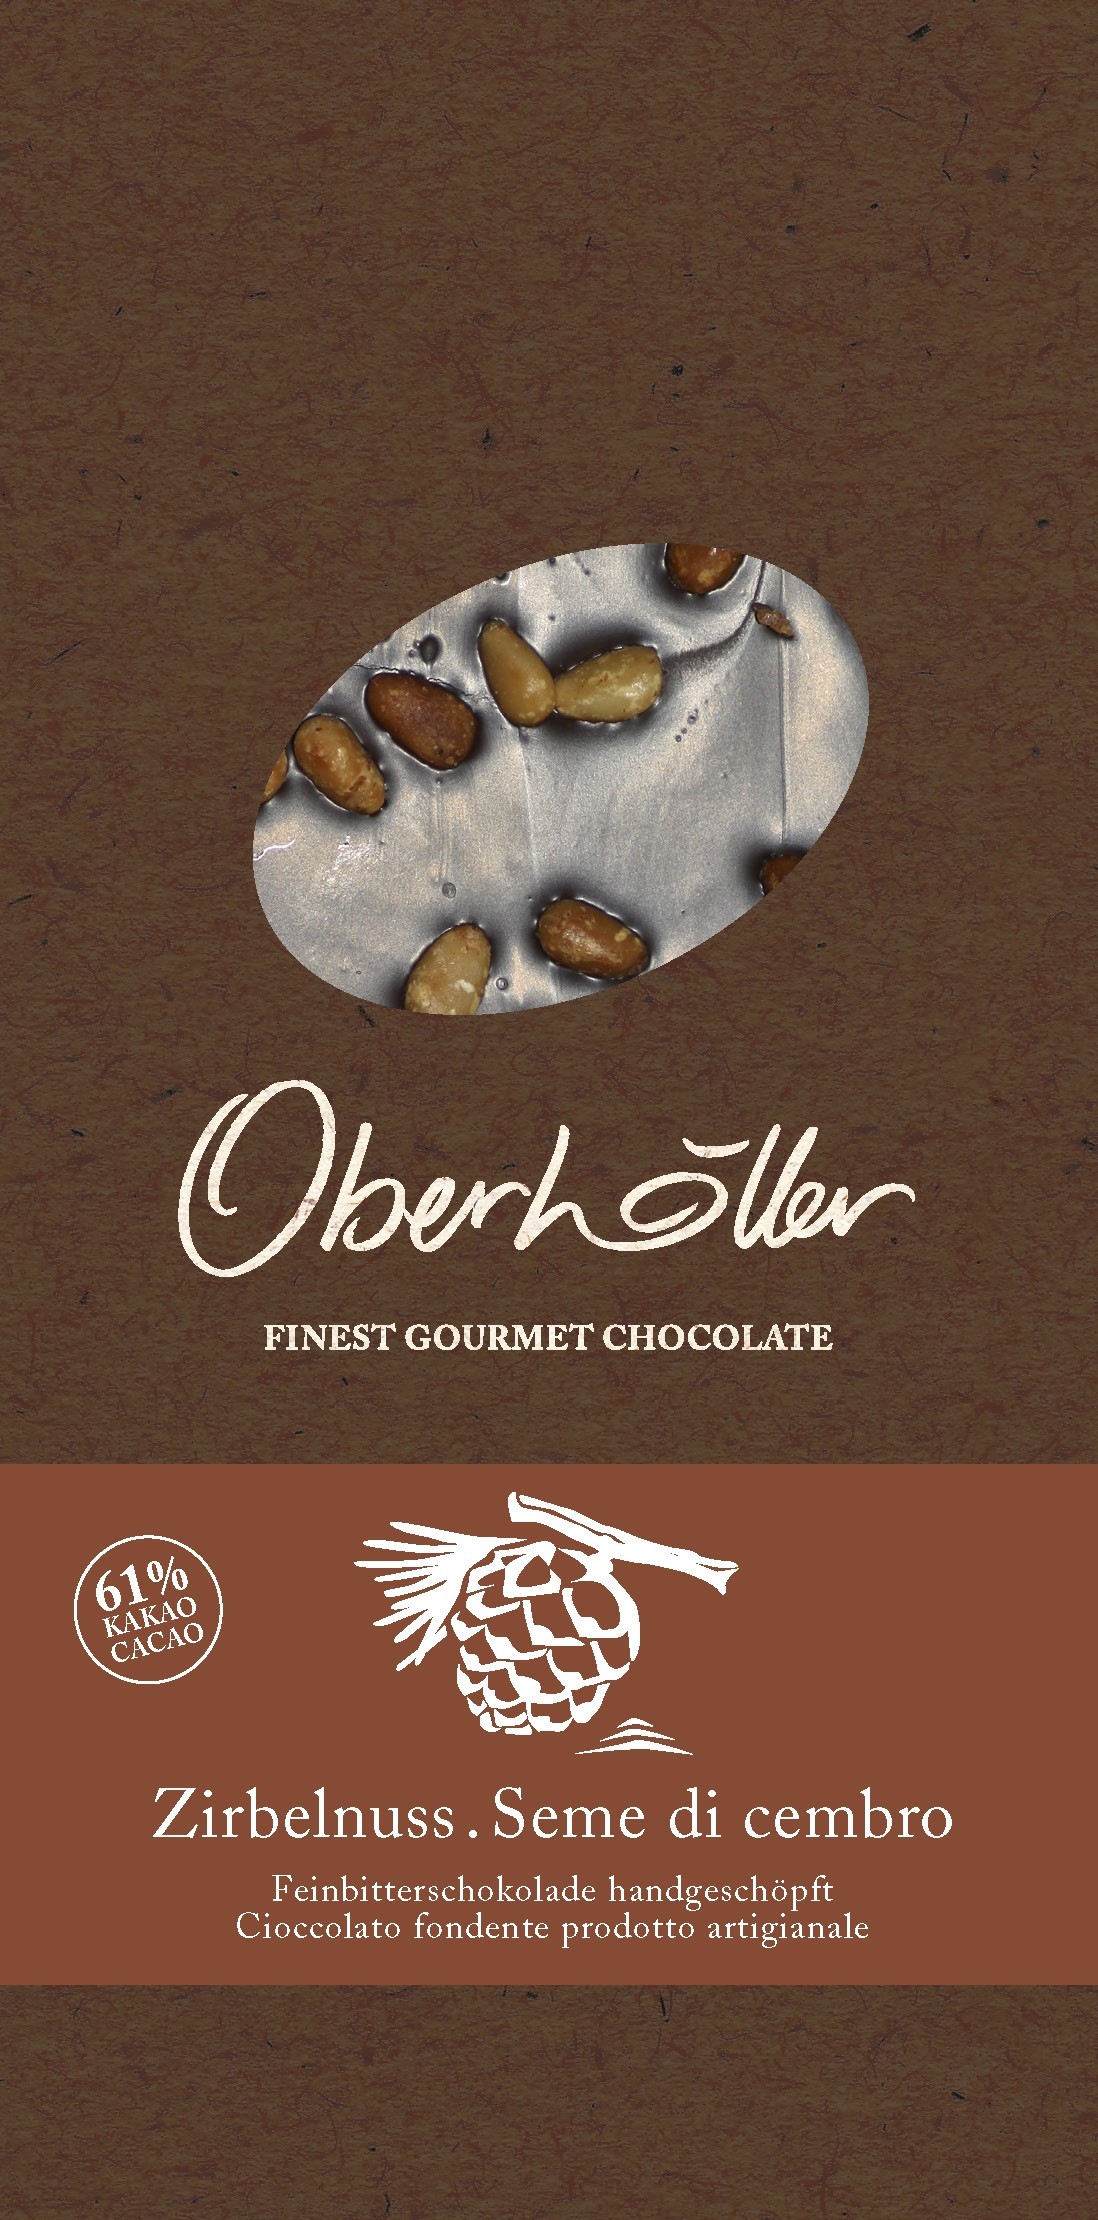 Fine Dark Chocolate with Mountain Pine Oberhöller 100 g